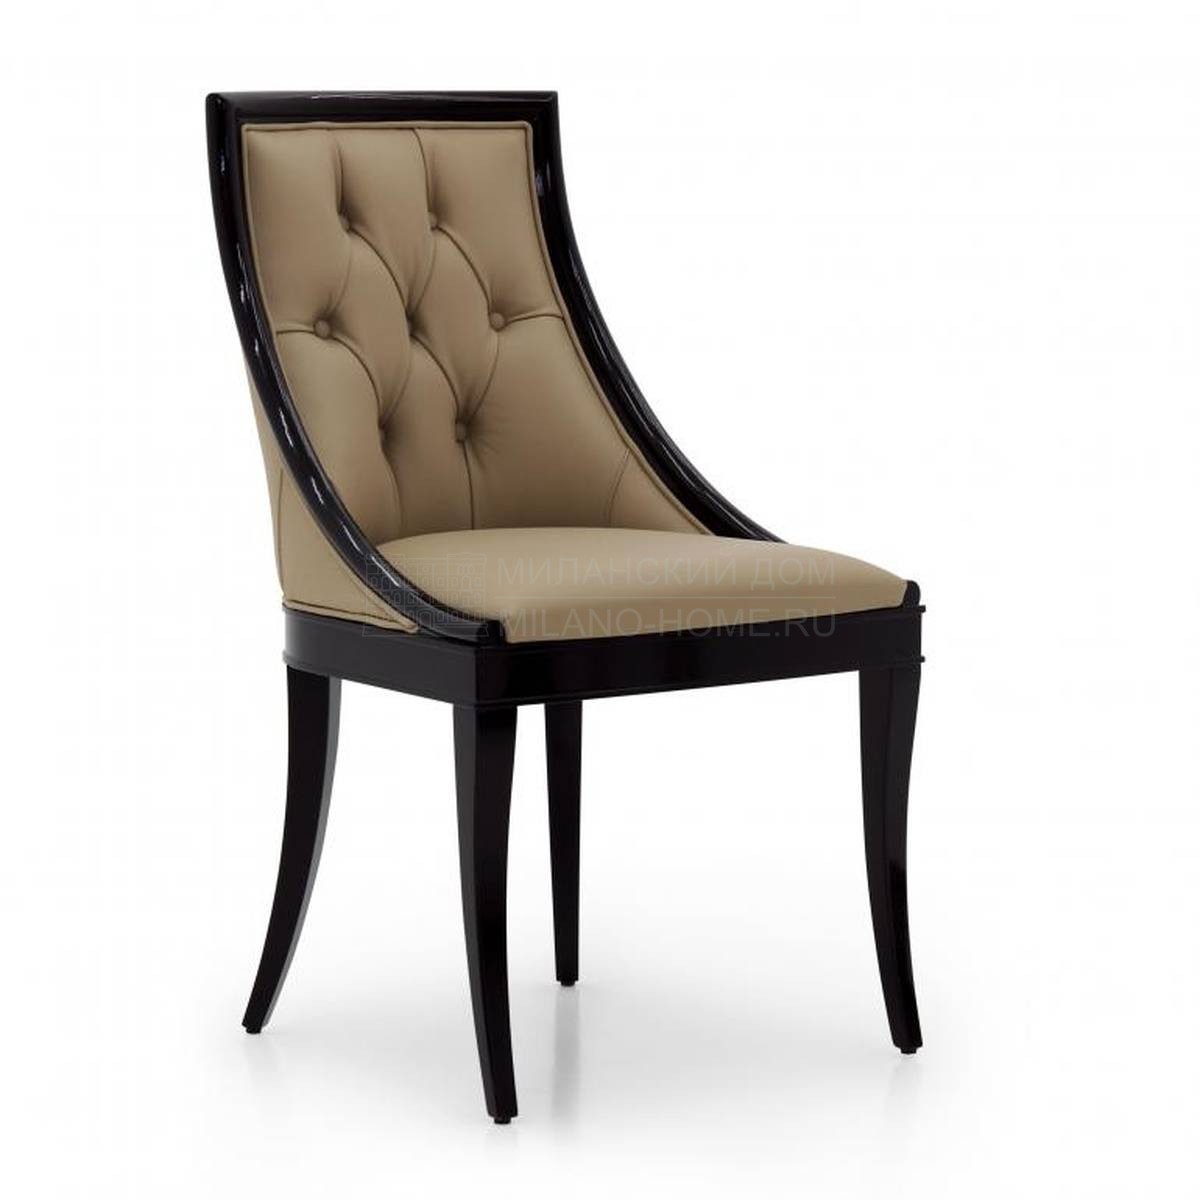 Кожаный стул Amina leather из Италии фабрики SEVEN SEDIE